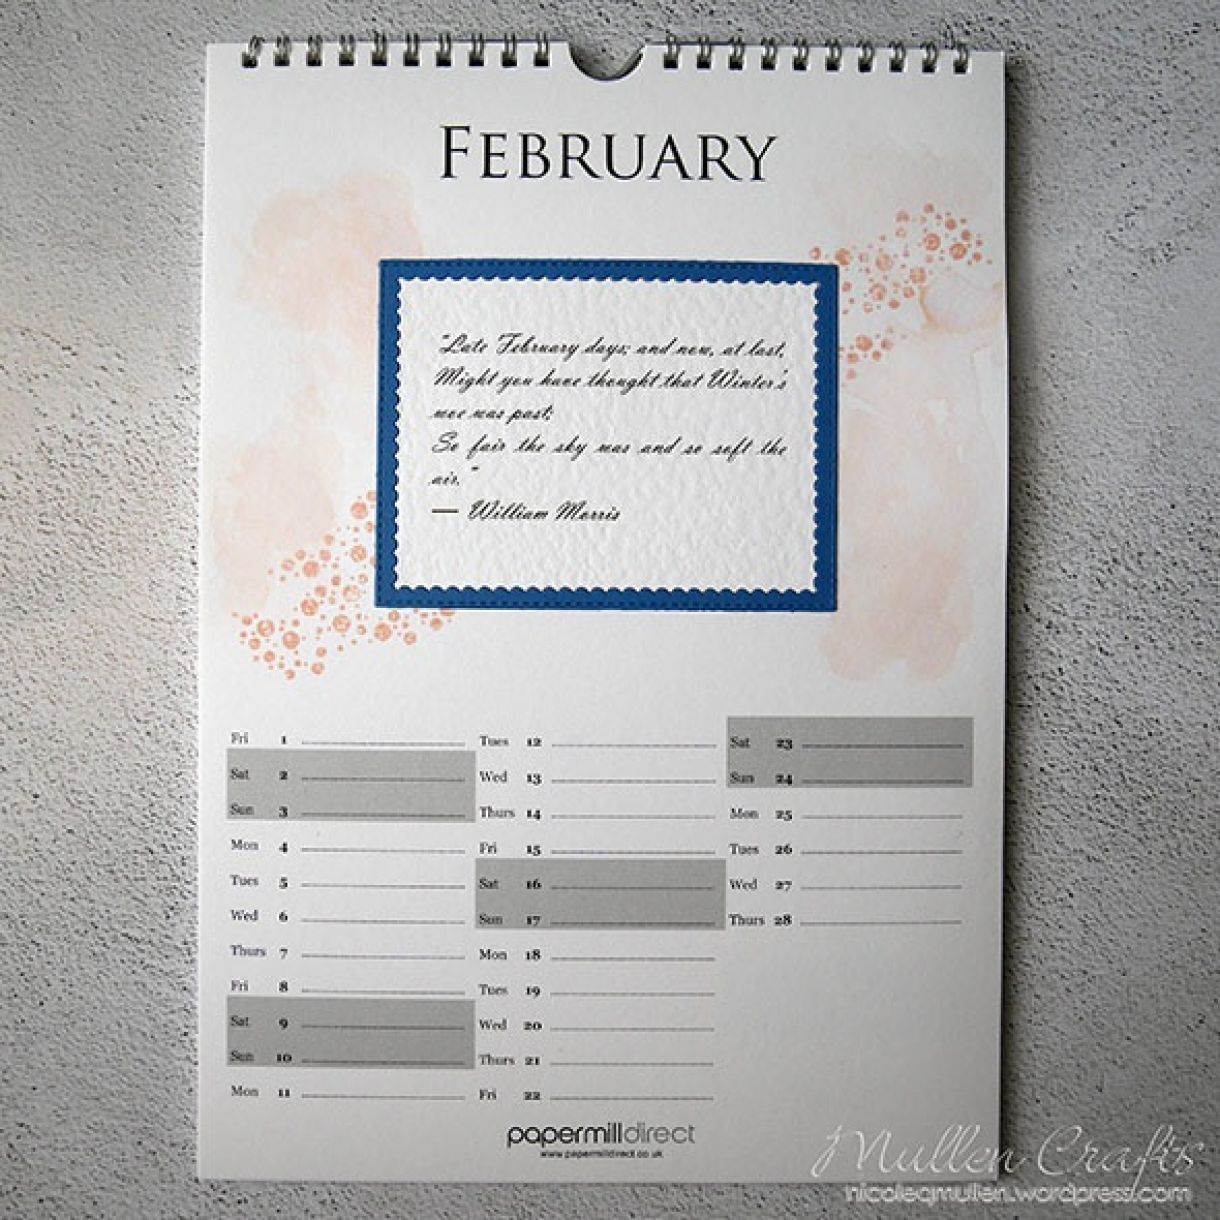 Nicole Calendar Page February1